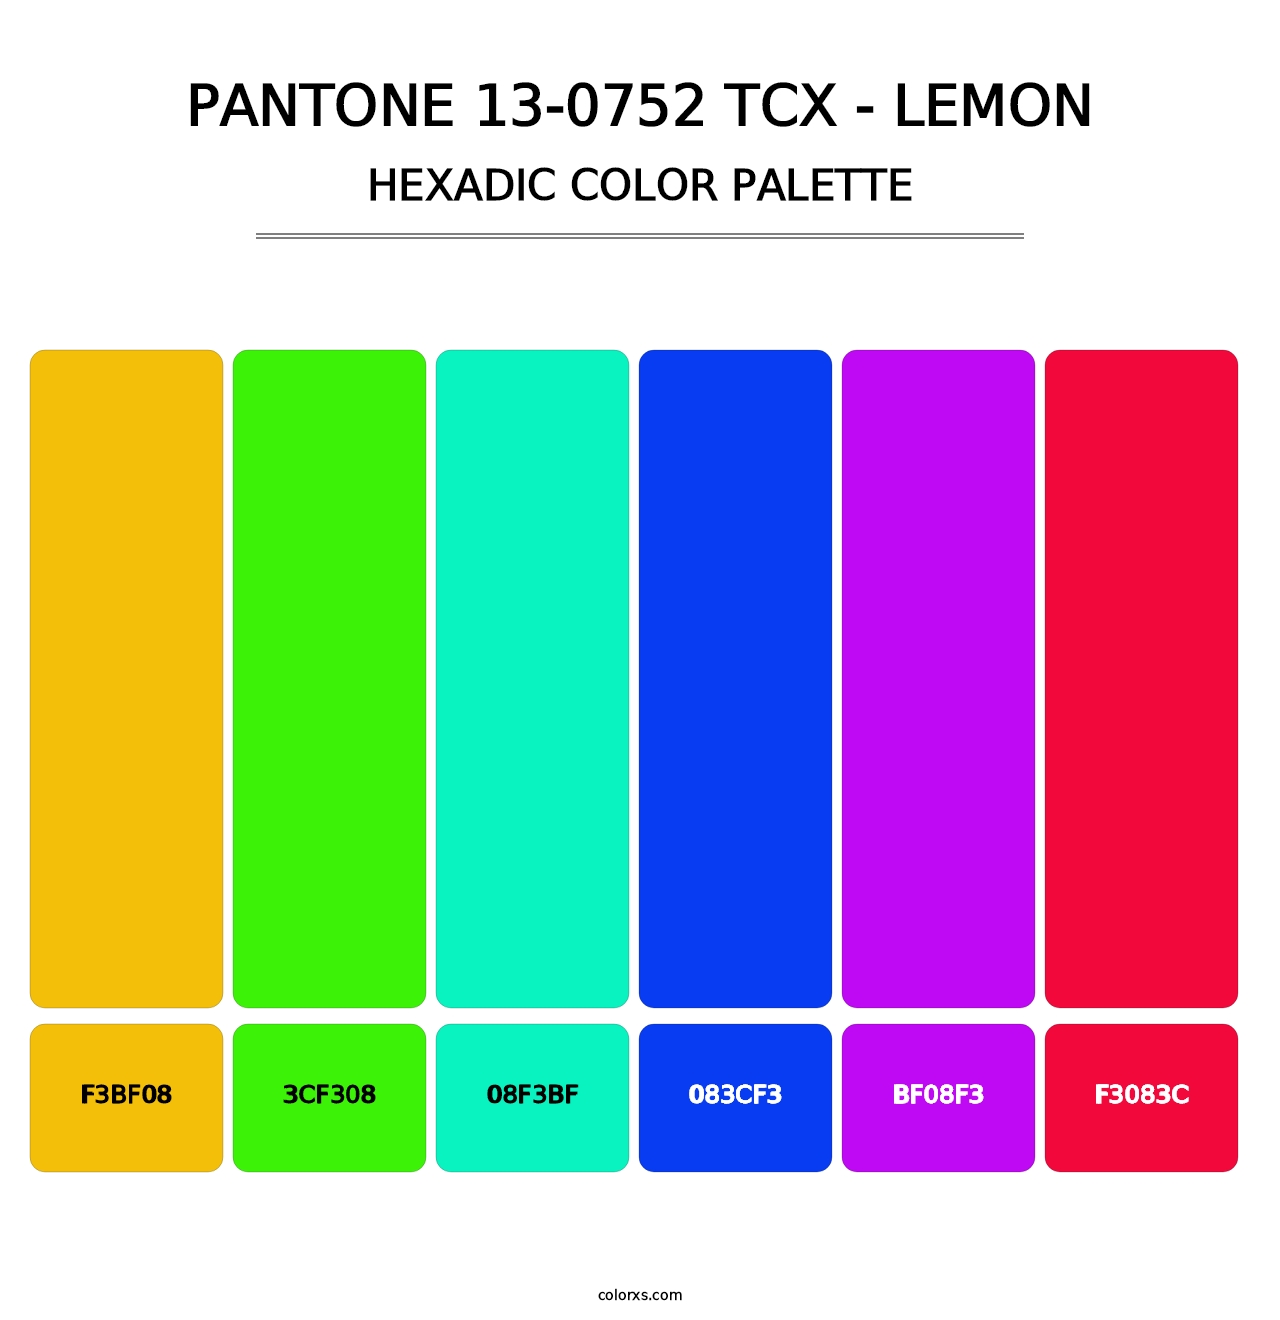 PANTONE 13-0752 TCX - Lemon - Hexadic Color Palette